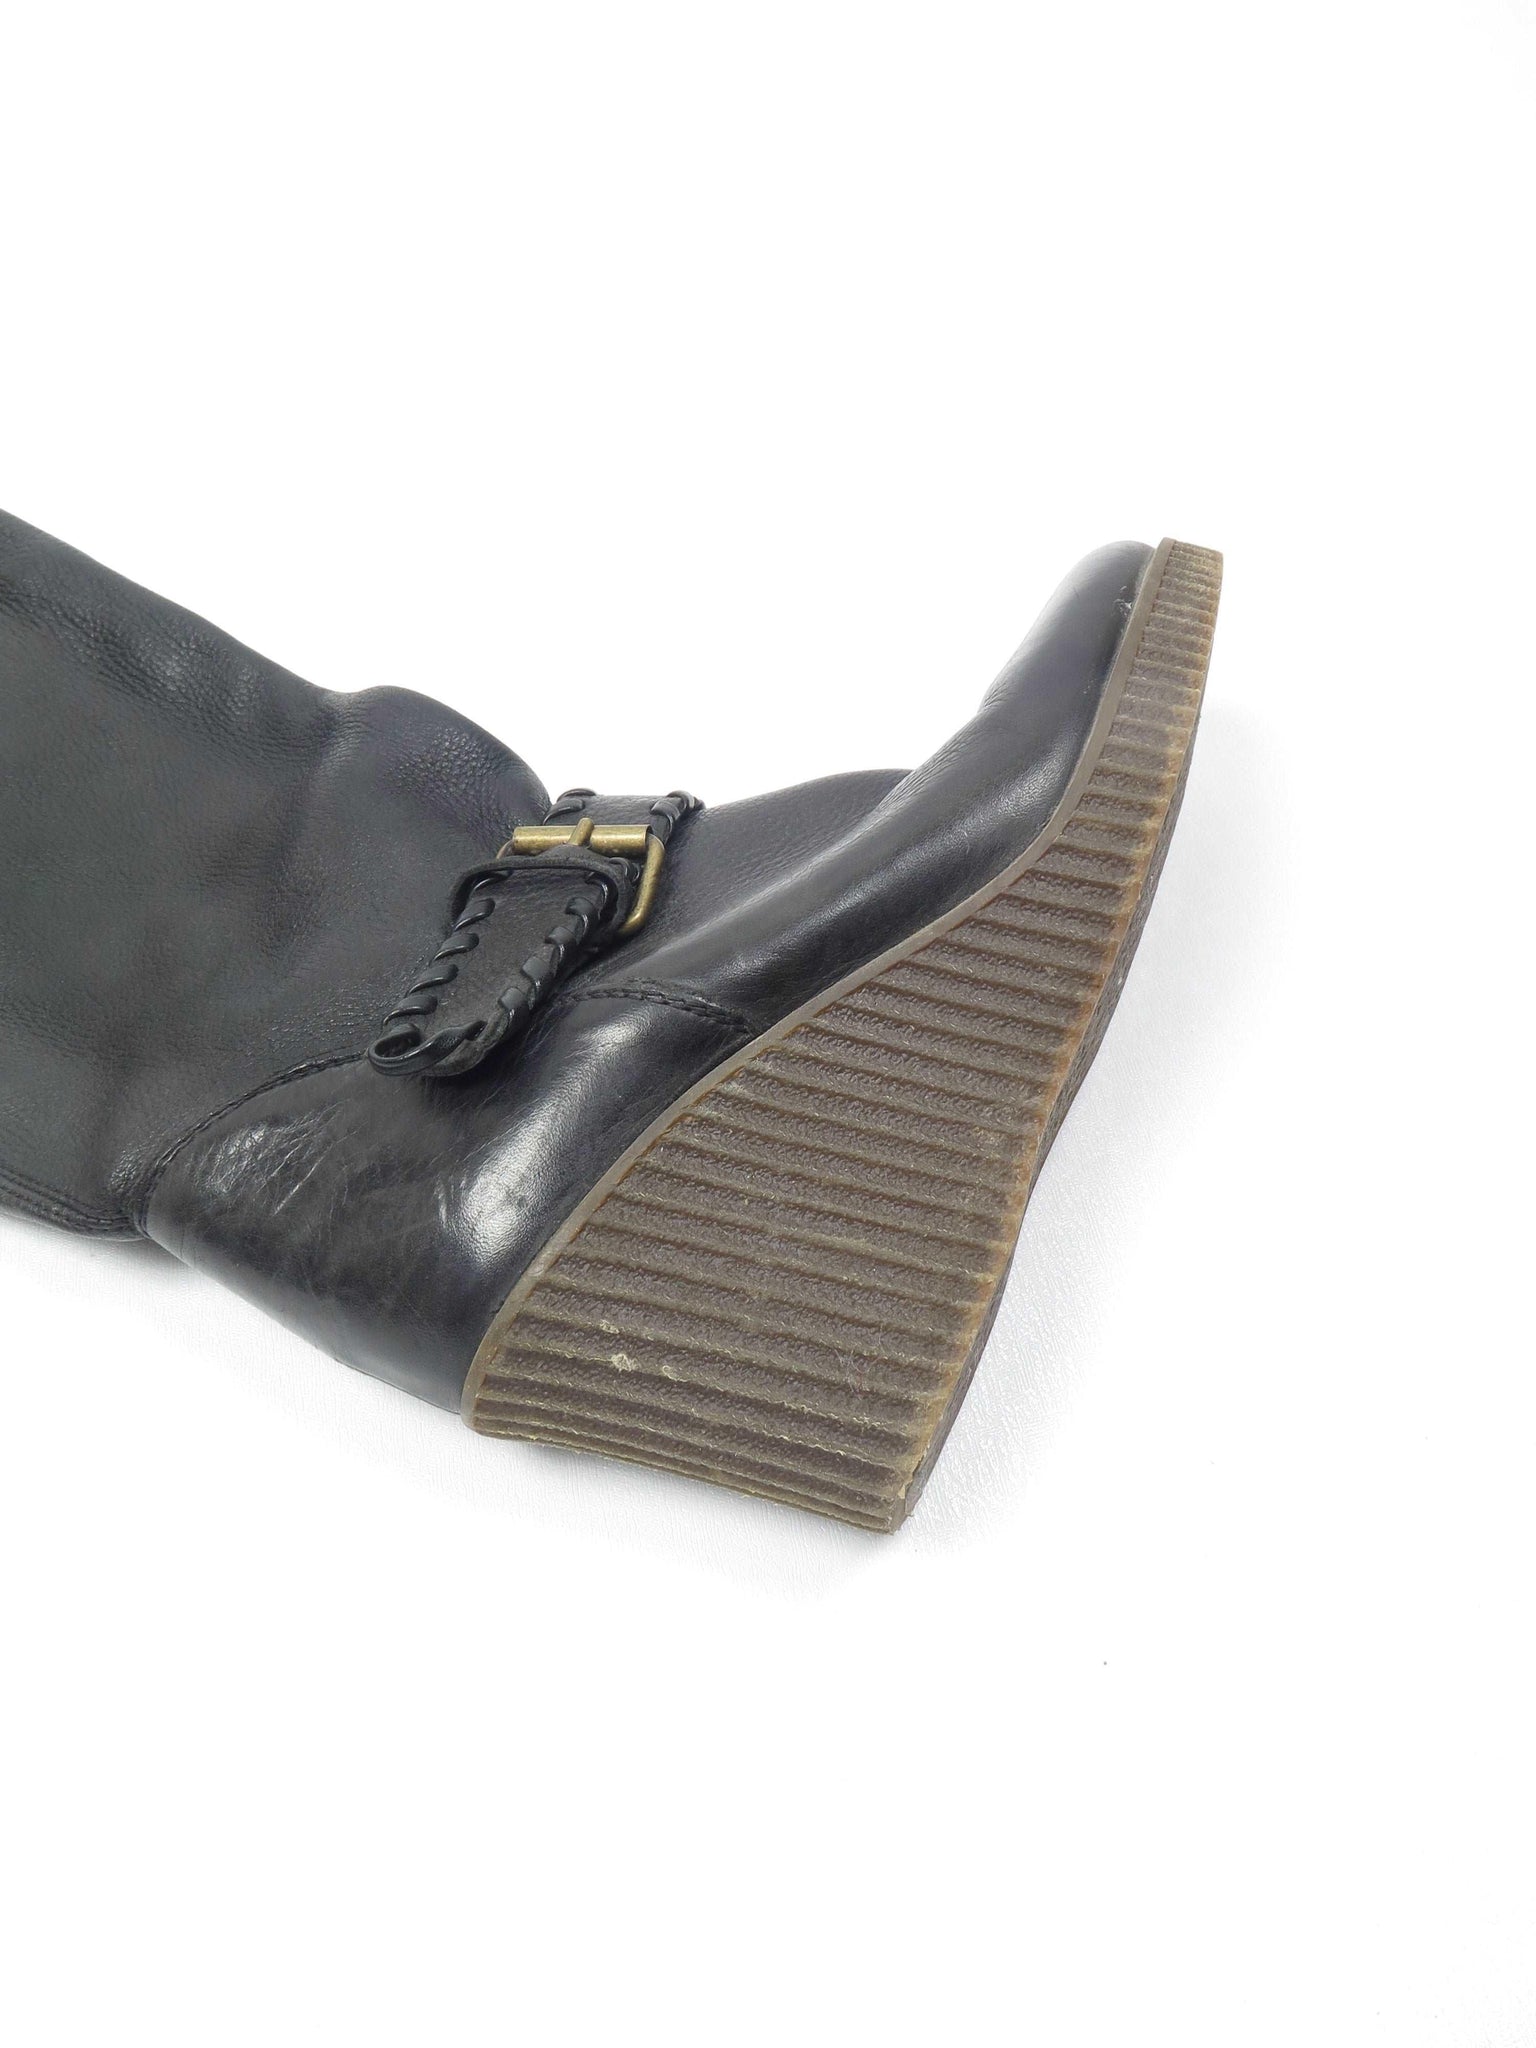 Women’s Black Leather Platform Boots UK5 Euro 38 - The Harlequin